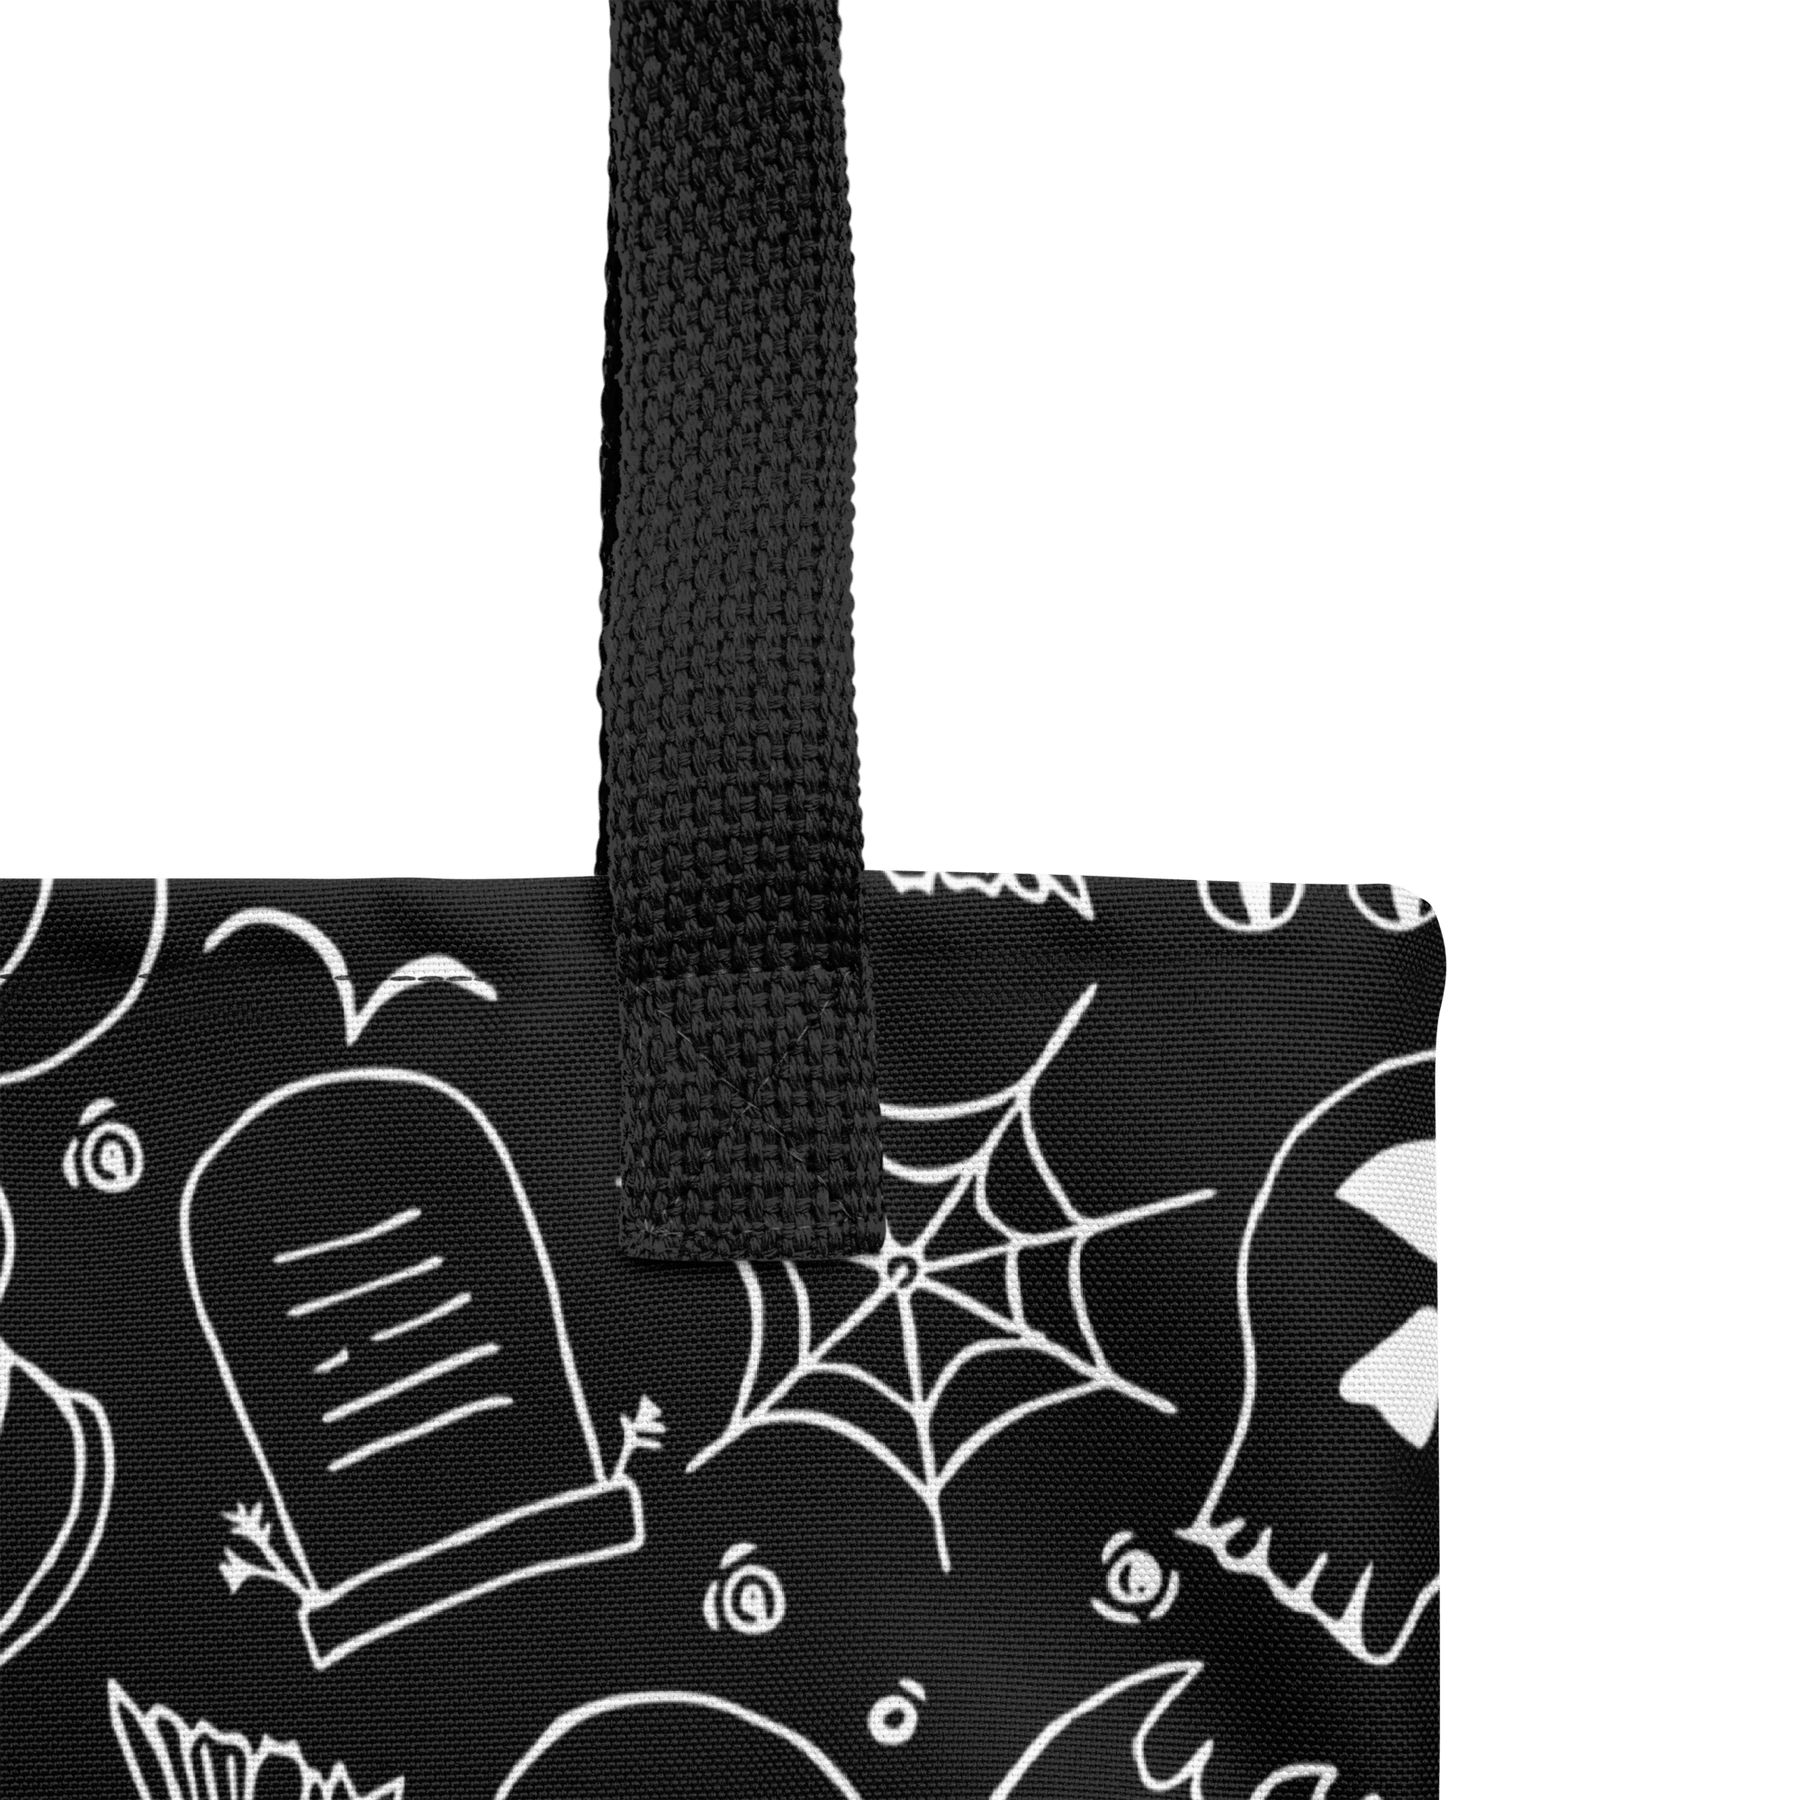 Creepy Cool Tote Bag - Goth Cloth Co.2675031_4533